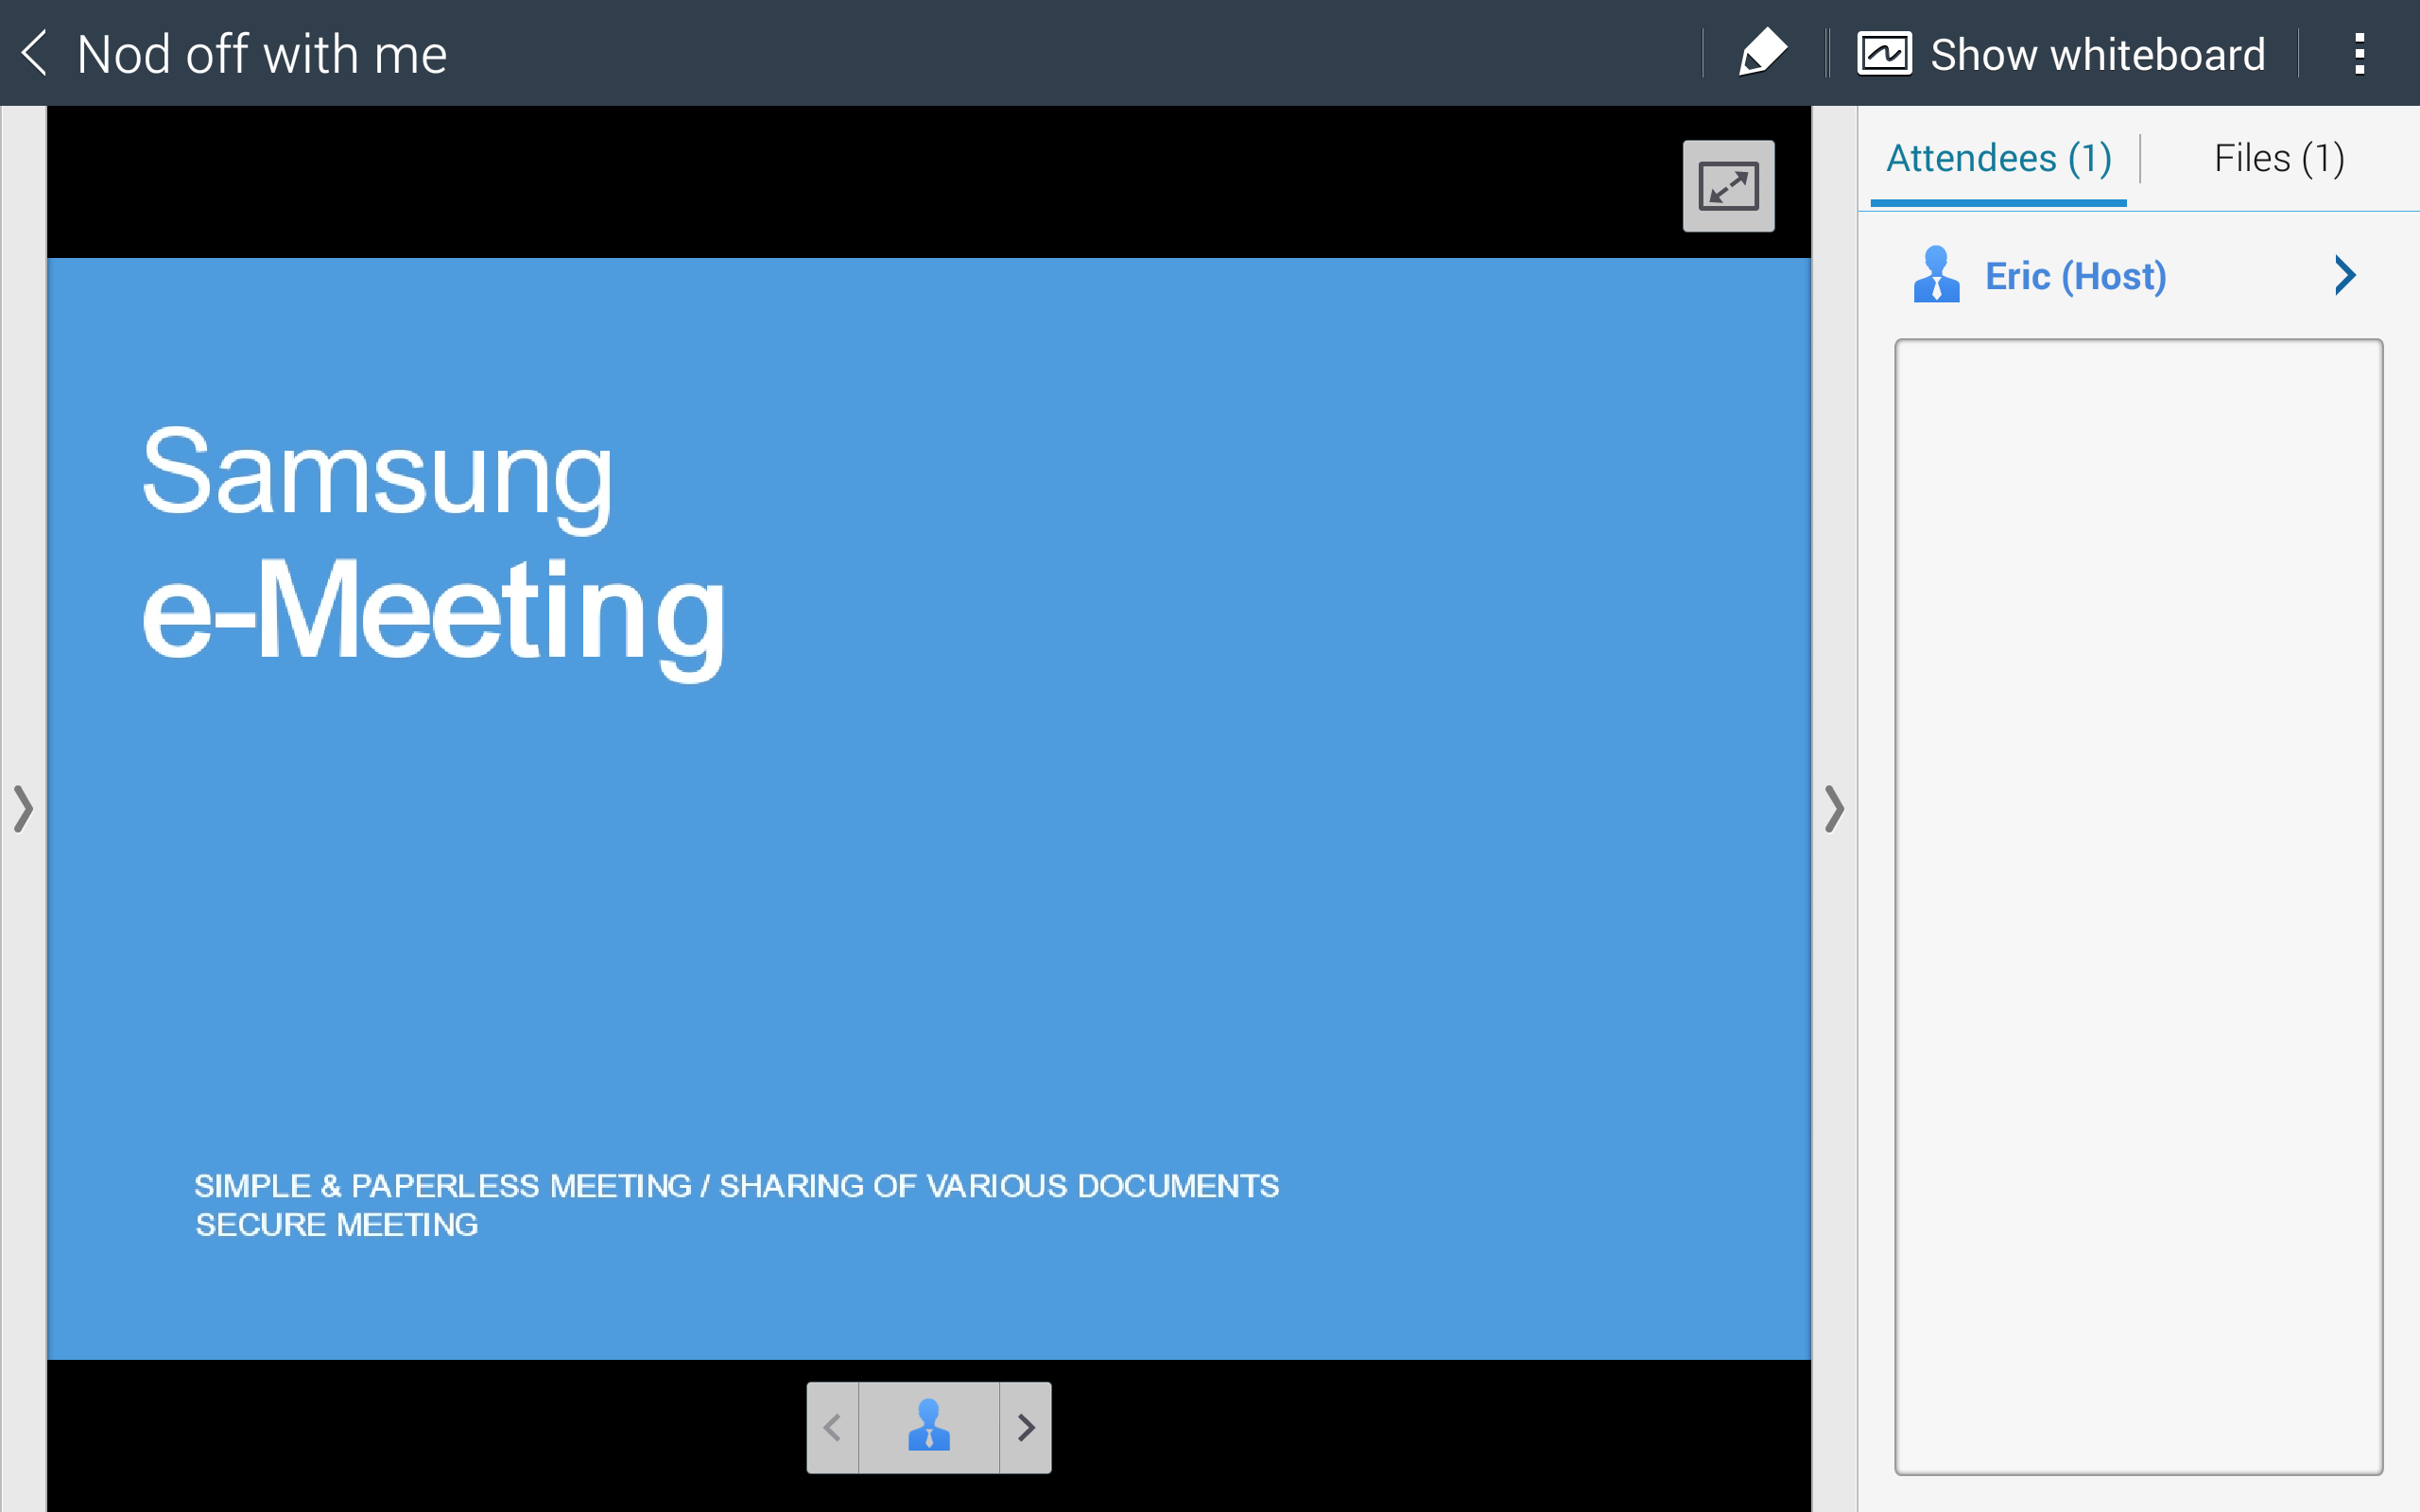 samsung galaxy tab pro 8.4 ycp review samsung emeeting demo